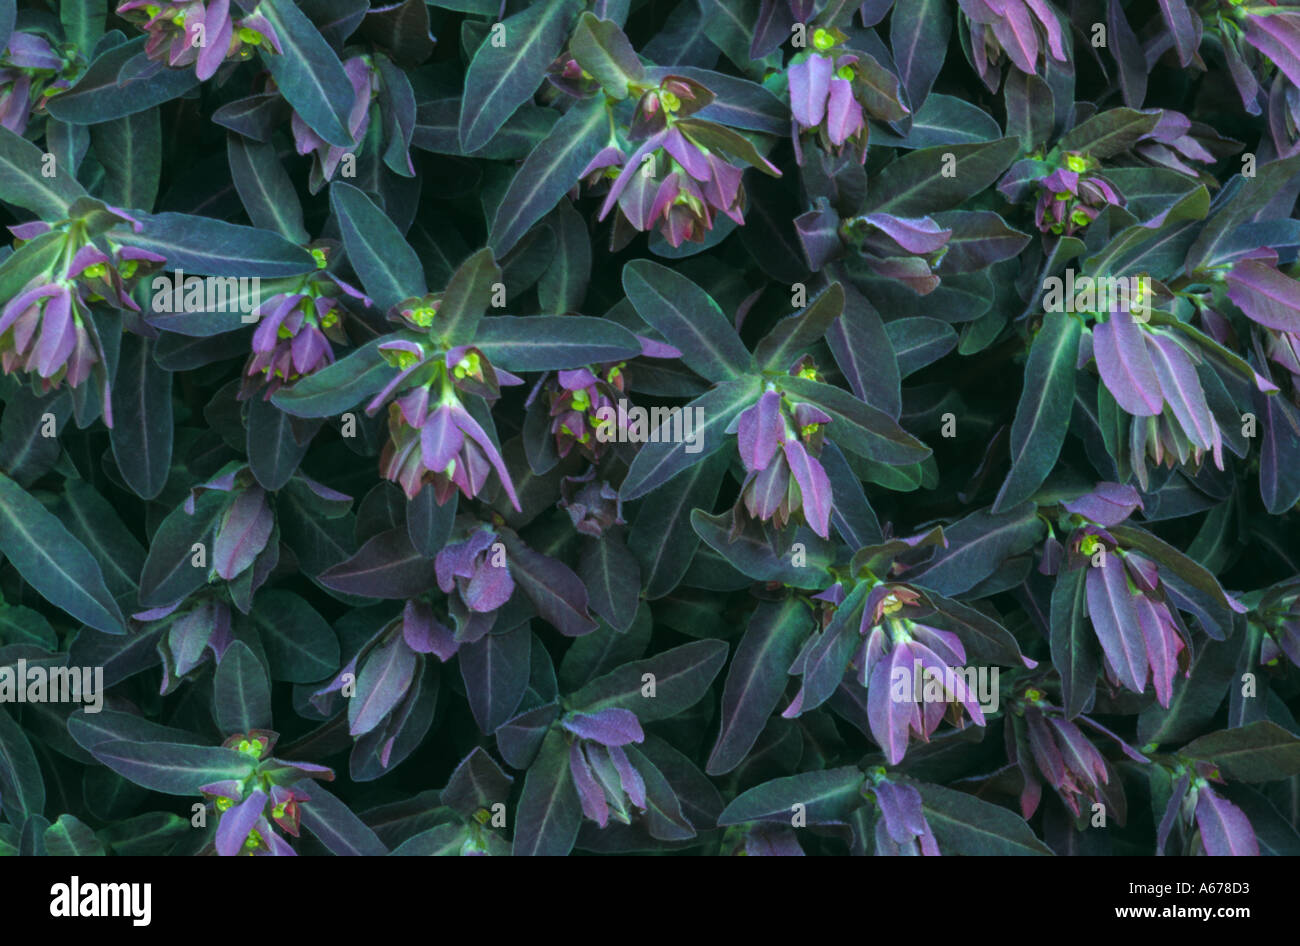 Euphorbia amygdaloides Purpurea Stock Photo